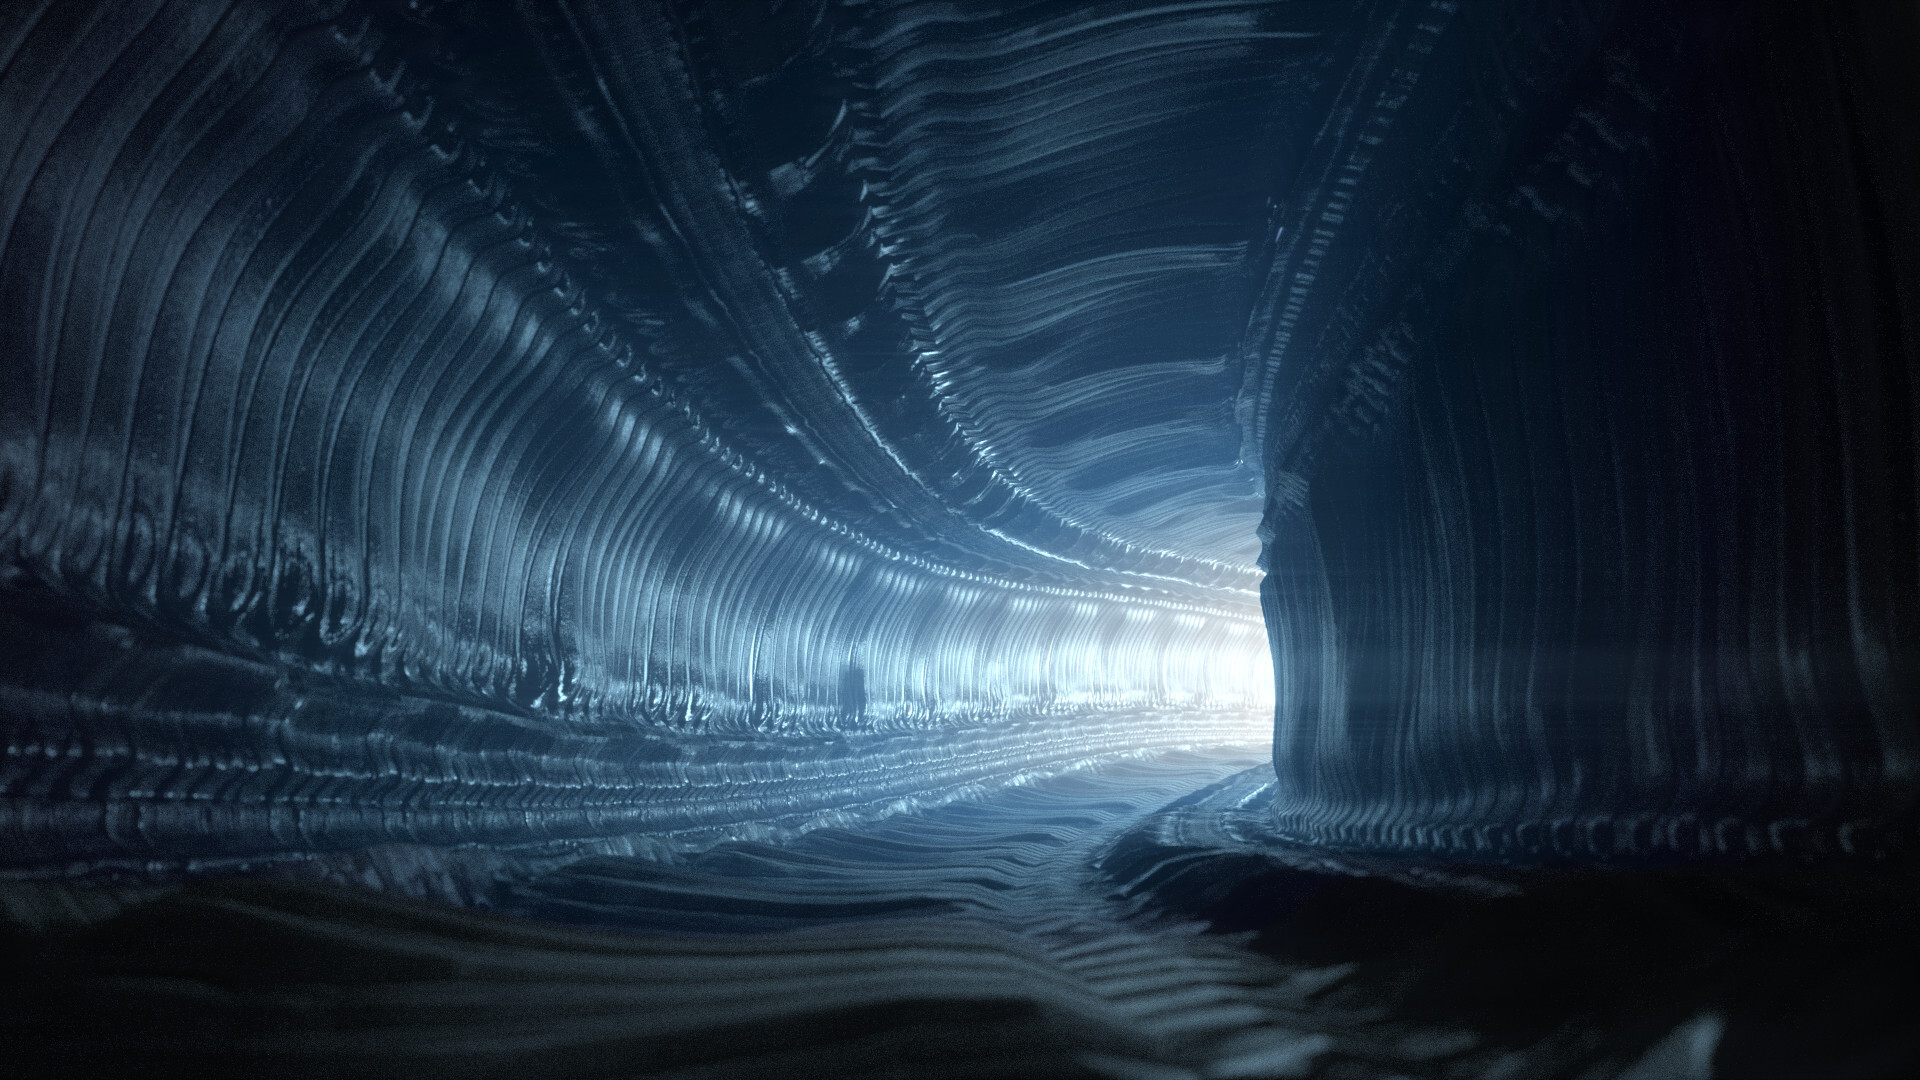 H.R. Giger: Inside The Alien Spaceship, Xenomorph Сhitin. 1920x1080 Full HD Wallpaper.